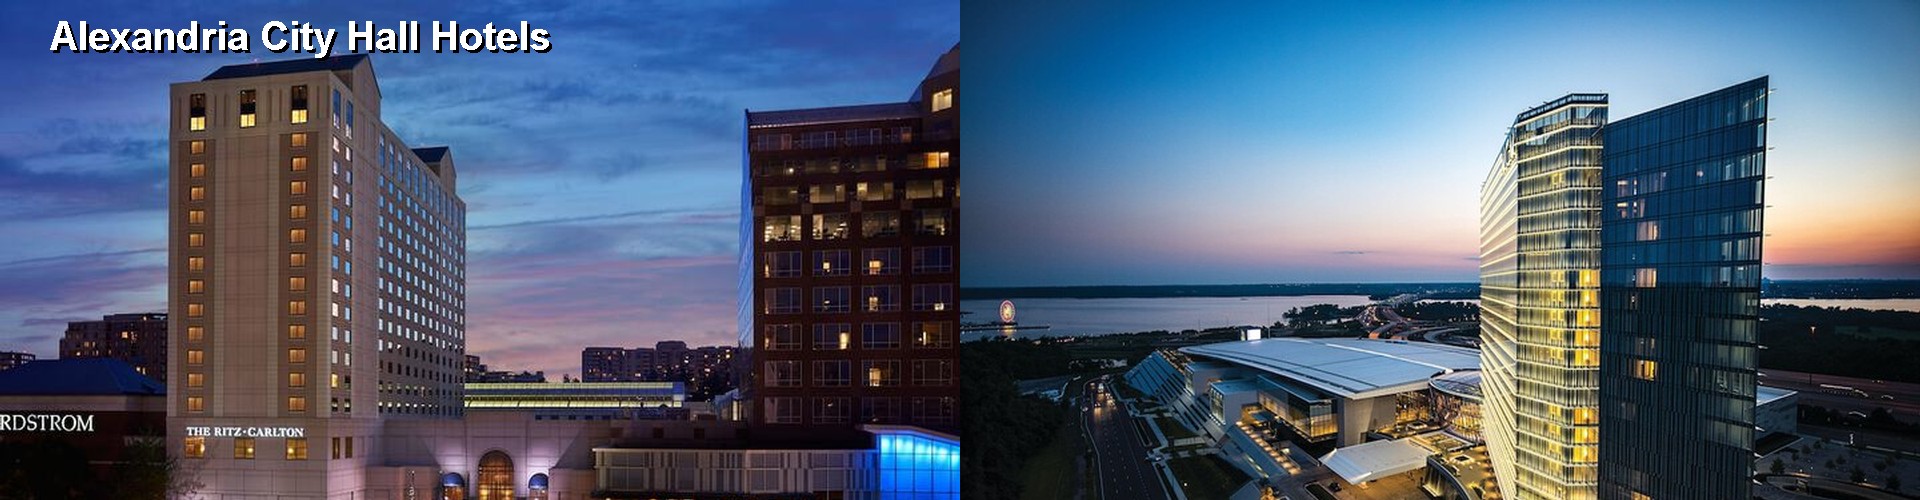 5 Best Hotels near Alexandria City Hall